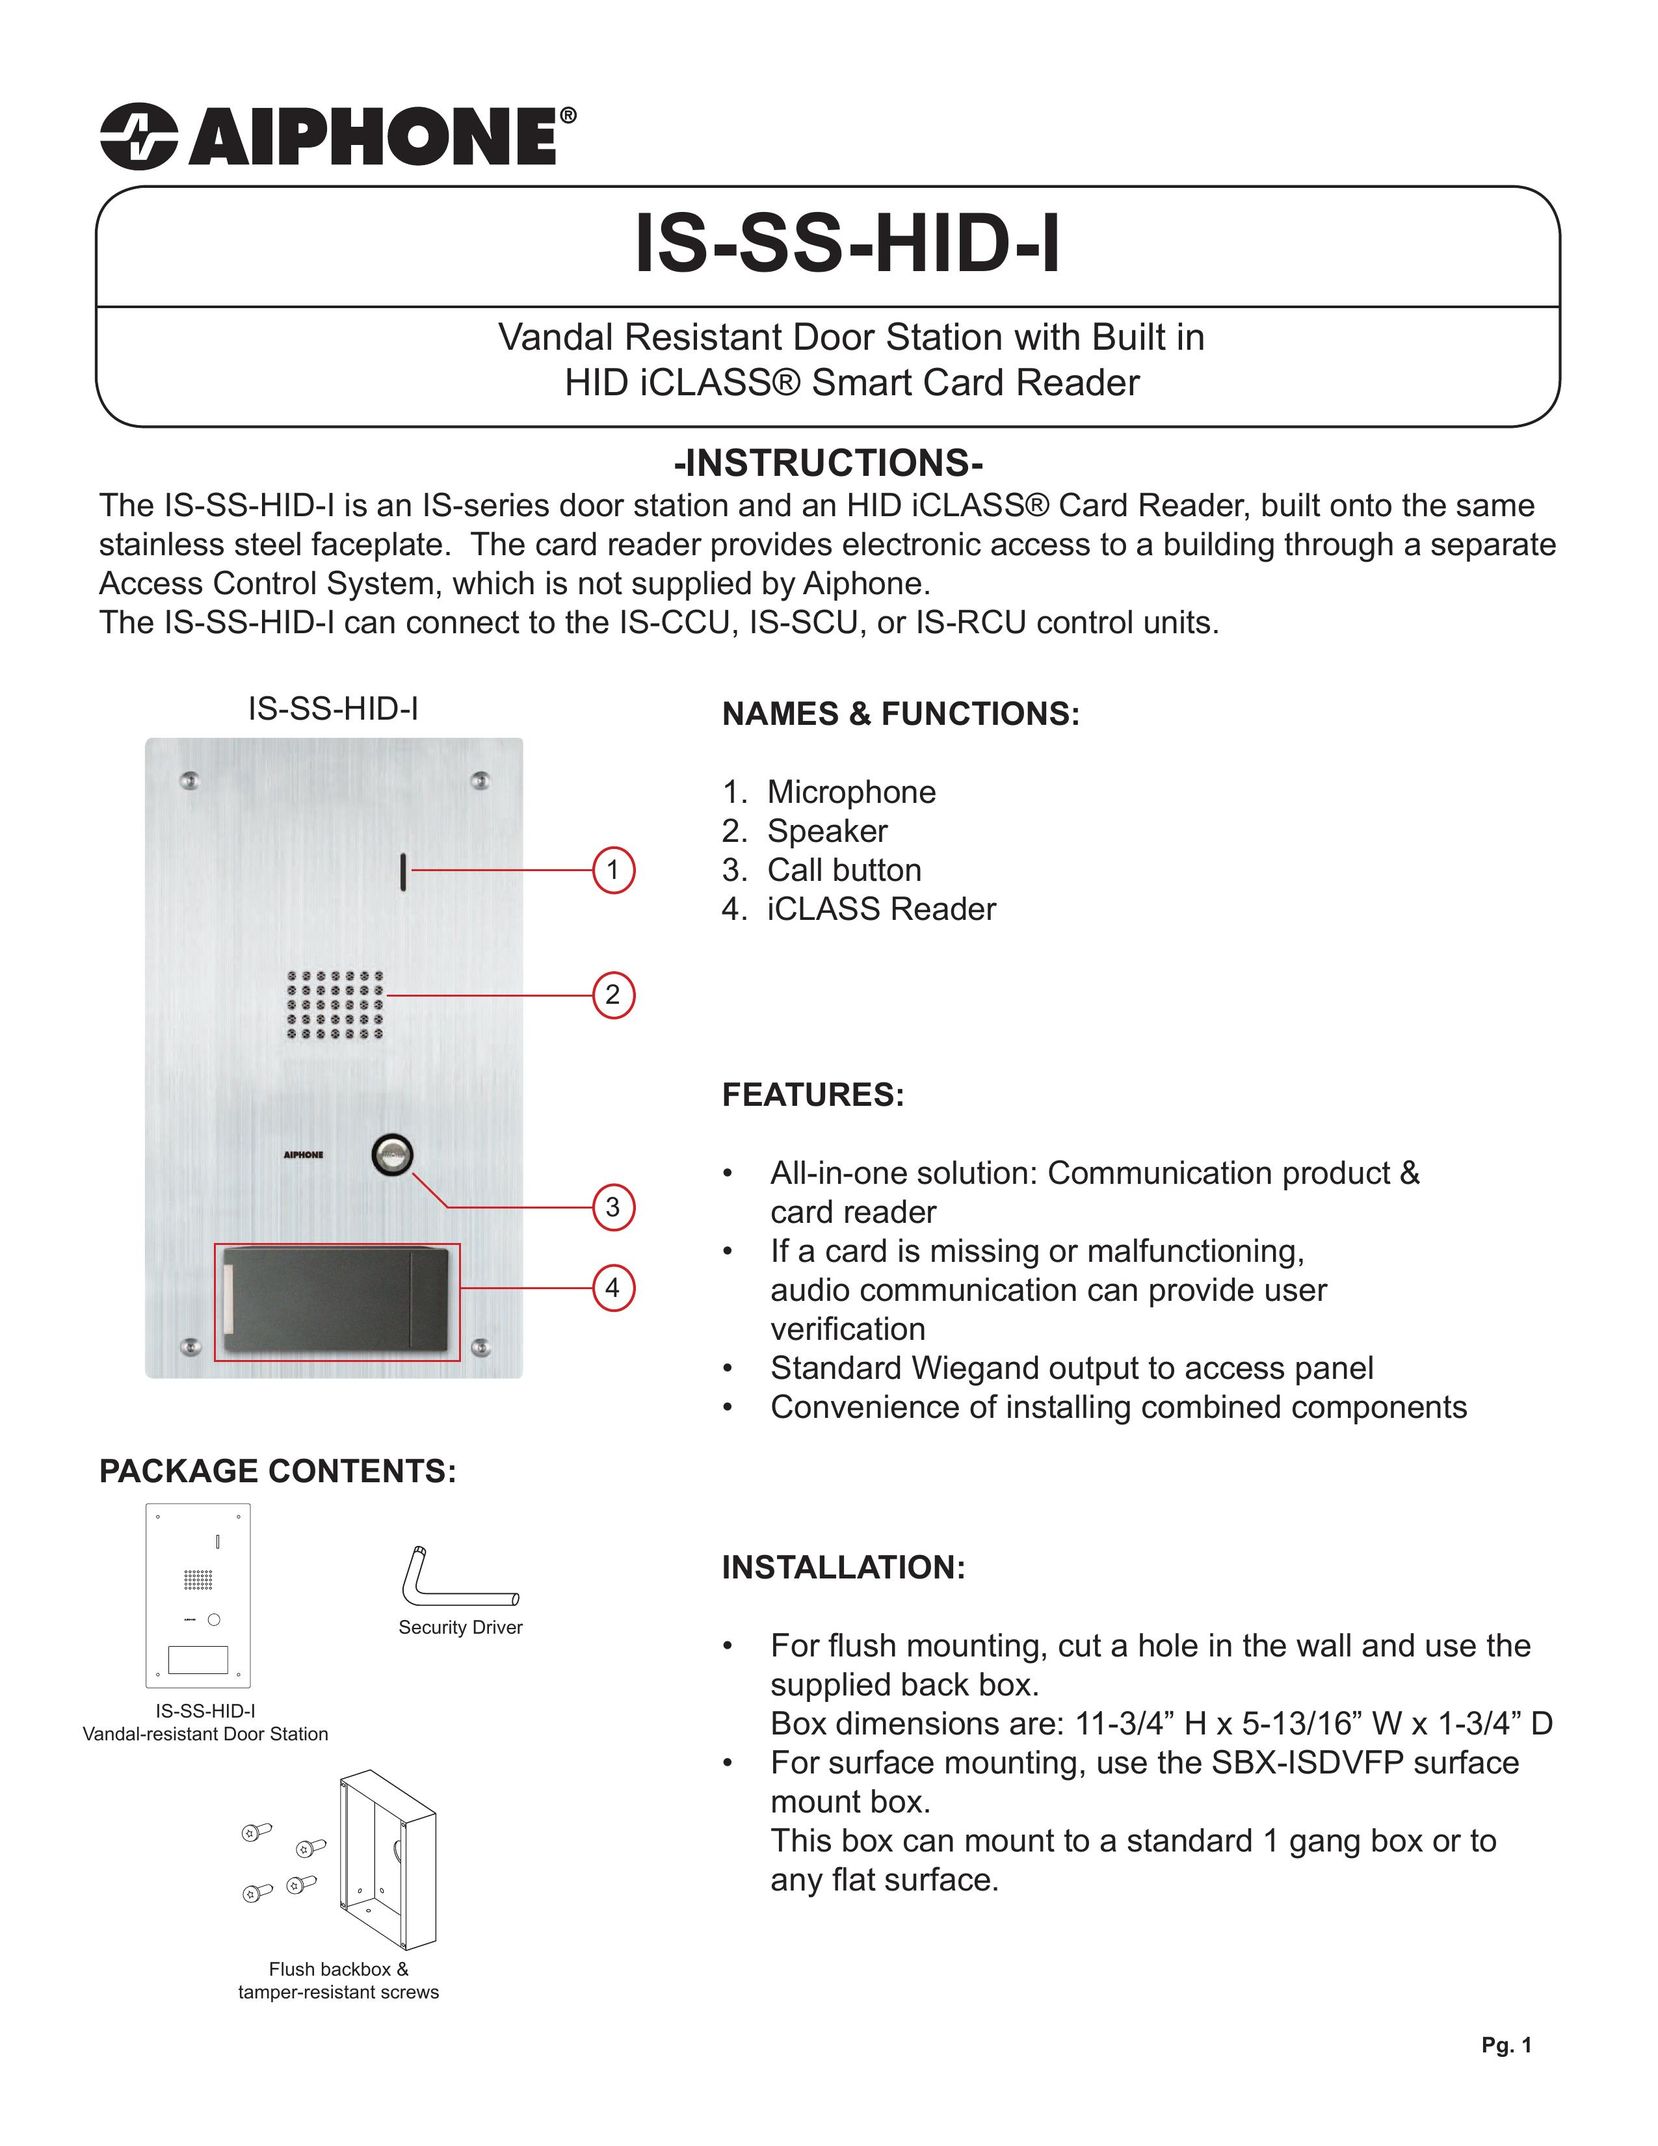 Aiphone IS-SS-HID-I Garage Door Opener User Manual (Page 1)